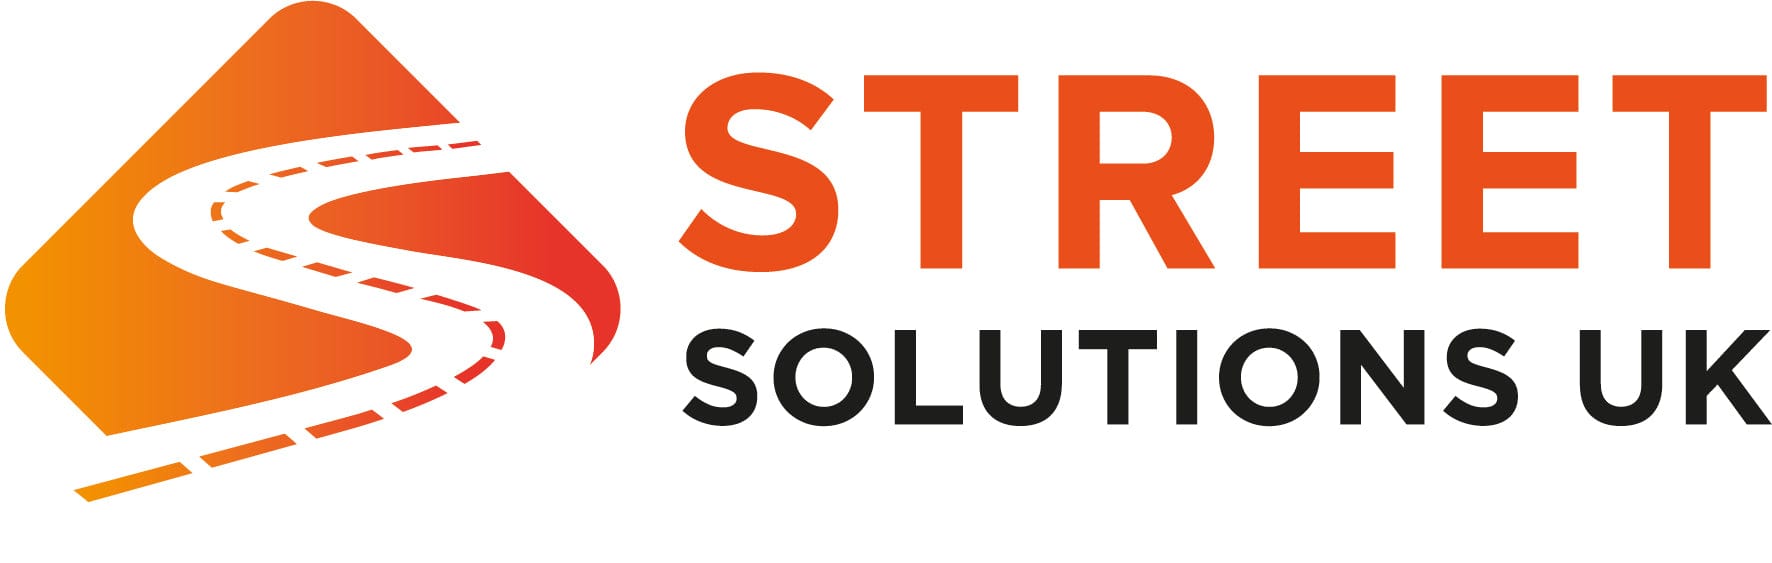 Street Solutions UK